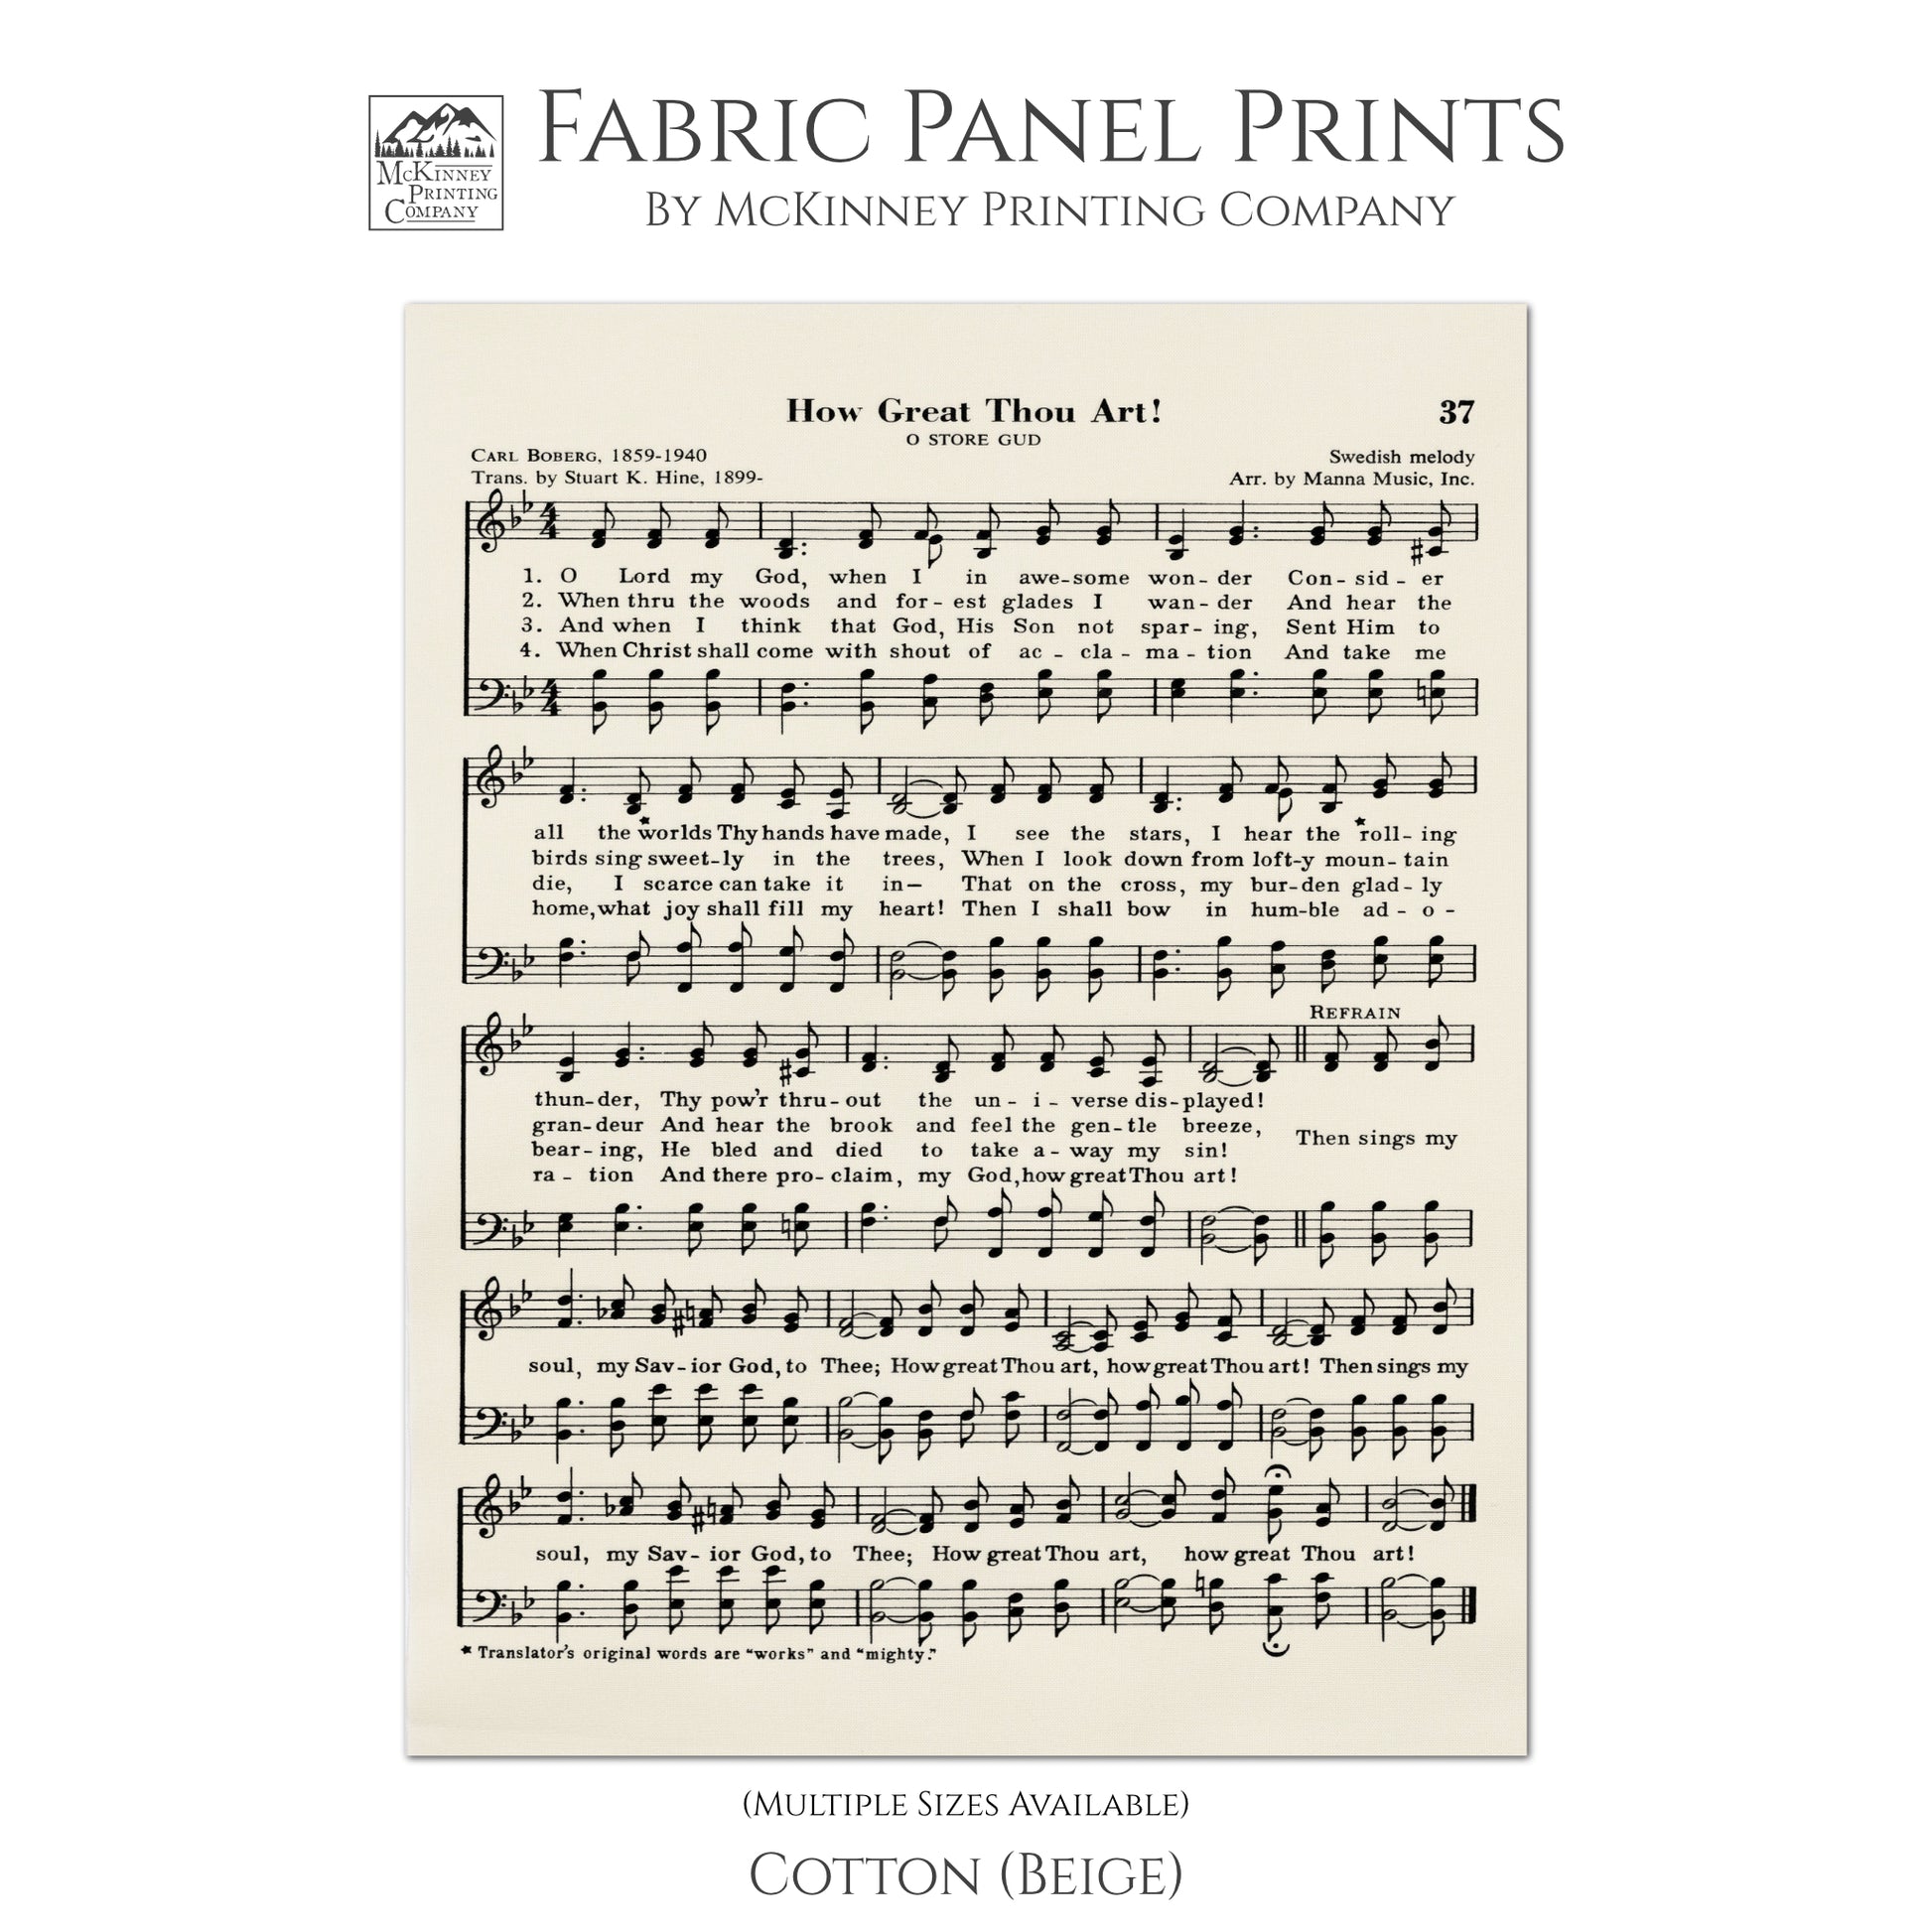 How Great Thou Art - Lyrics, Sheet Music, Fabric Panel, Quilt Block, Fabric Panel Print - Cotton